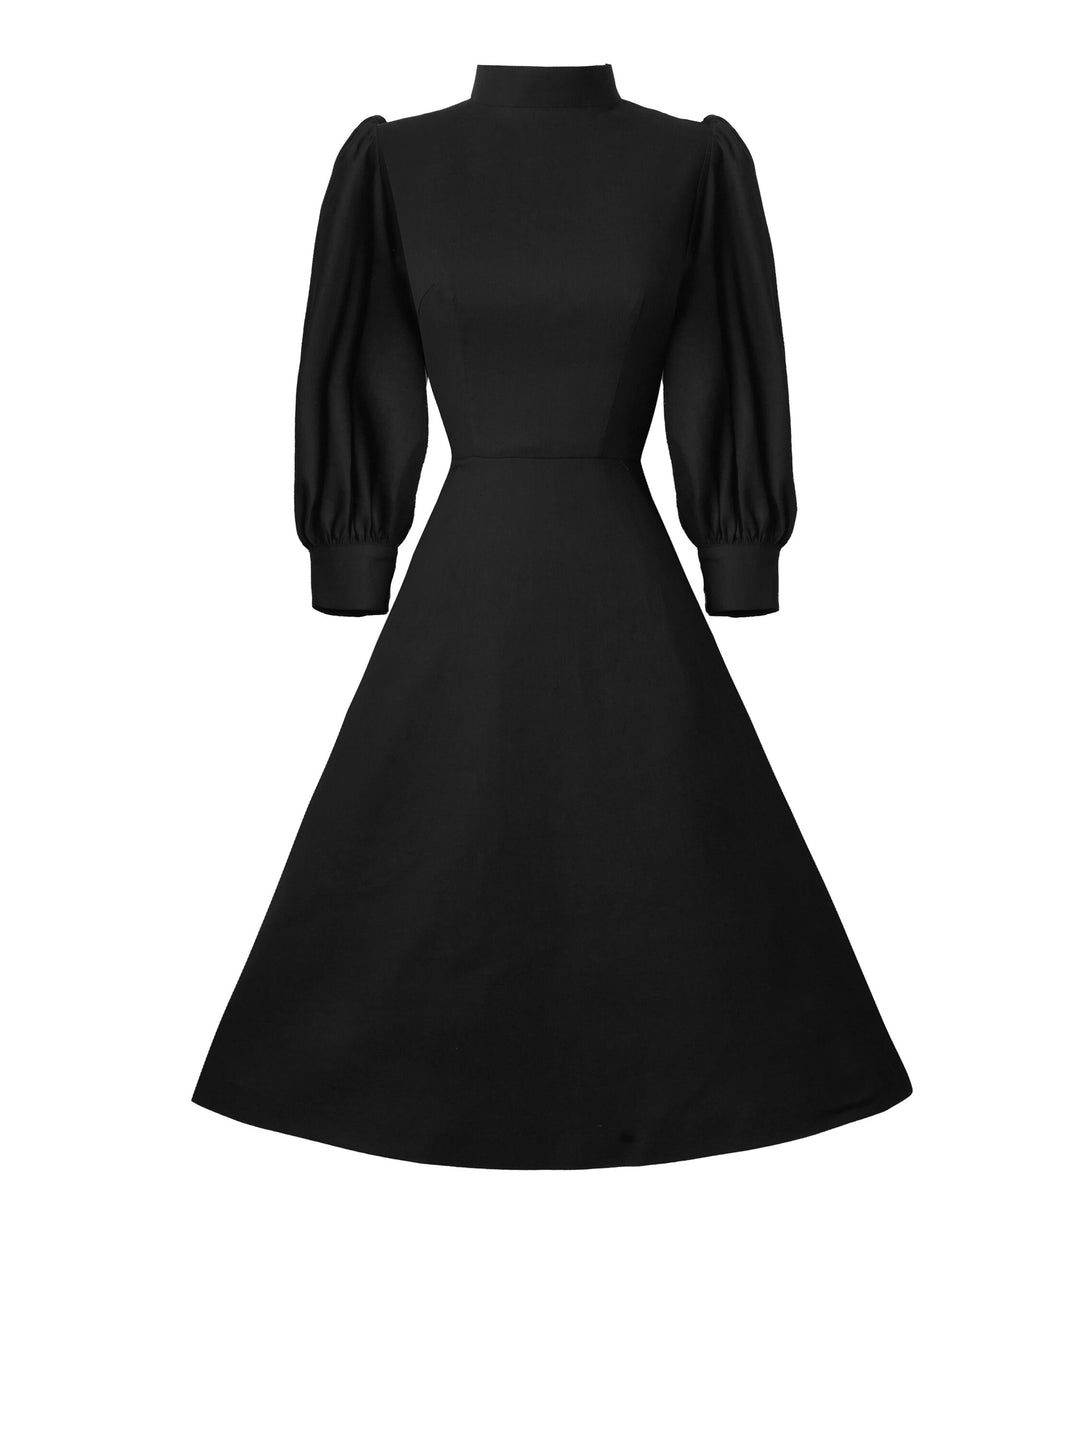 MTO - Beatrix Dress in Midnight Black Linen